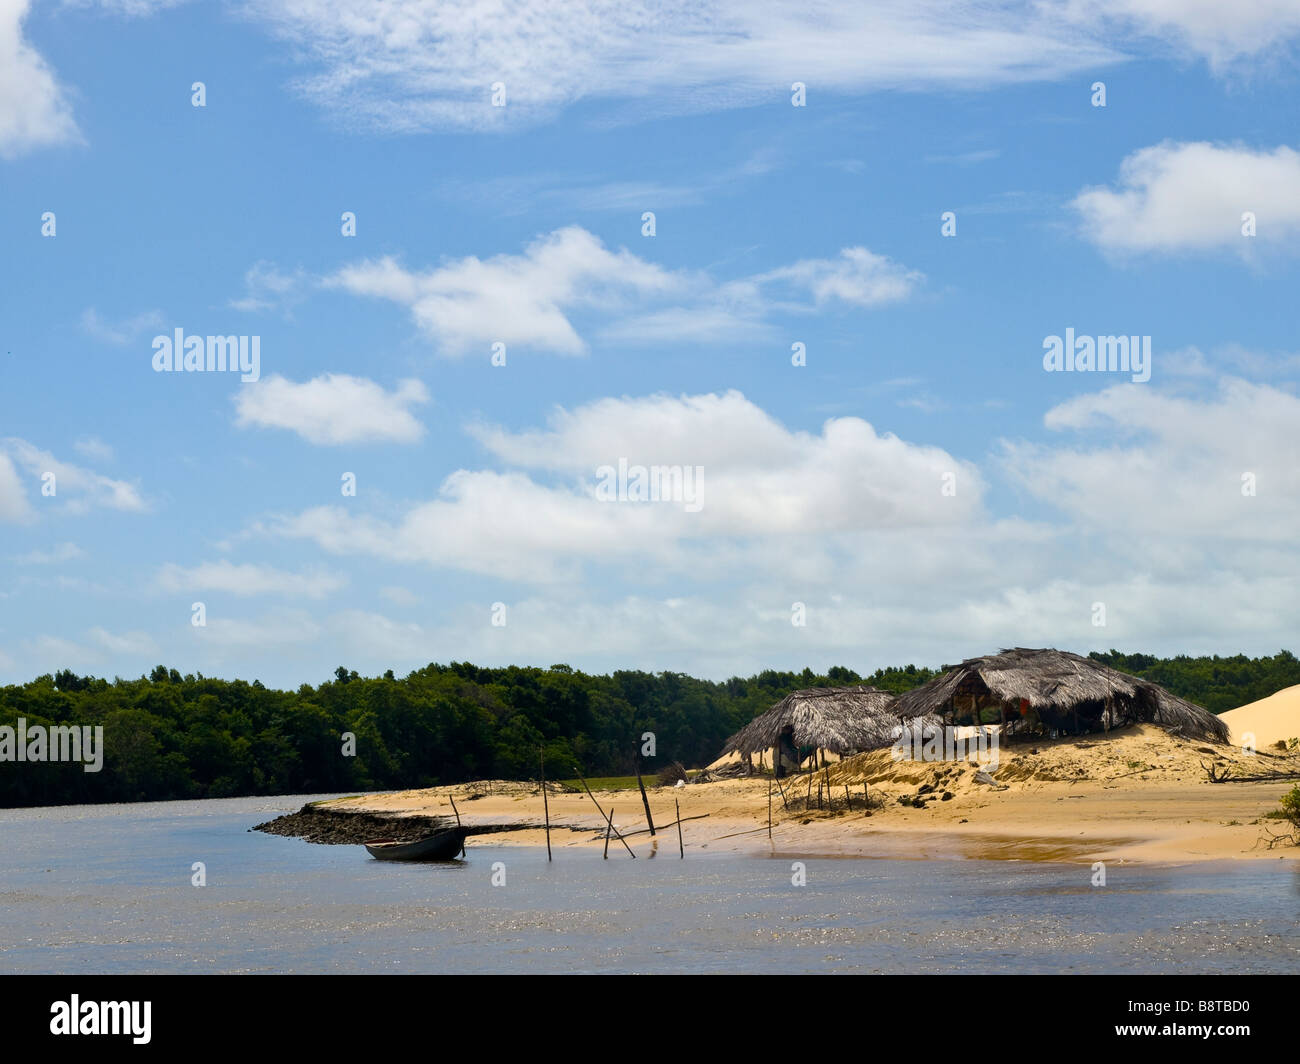 Eine Palme Hut Siedlung auf einer Sandbank am Fluss Rio Preguiças, Lençois Maranhenses Nationalpark, Brasilien. Stockfoto